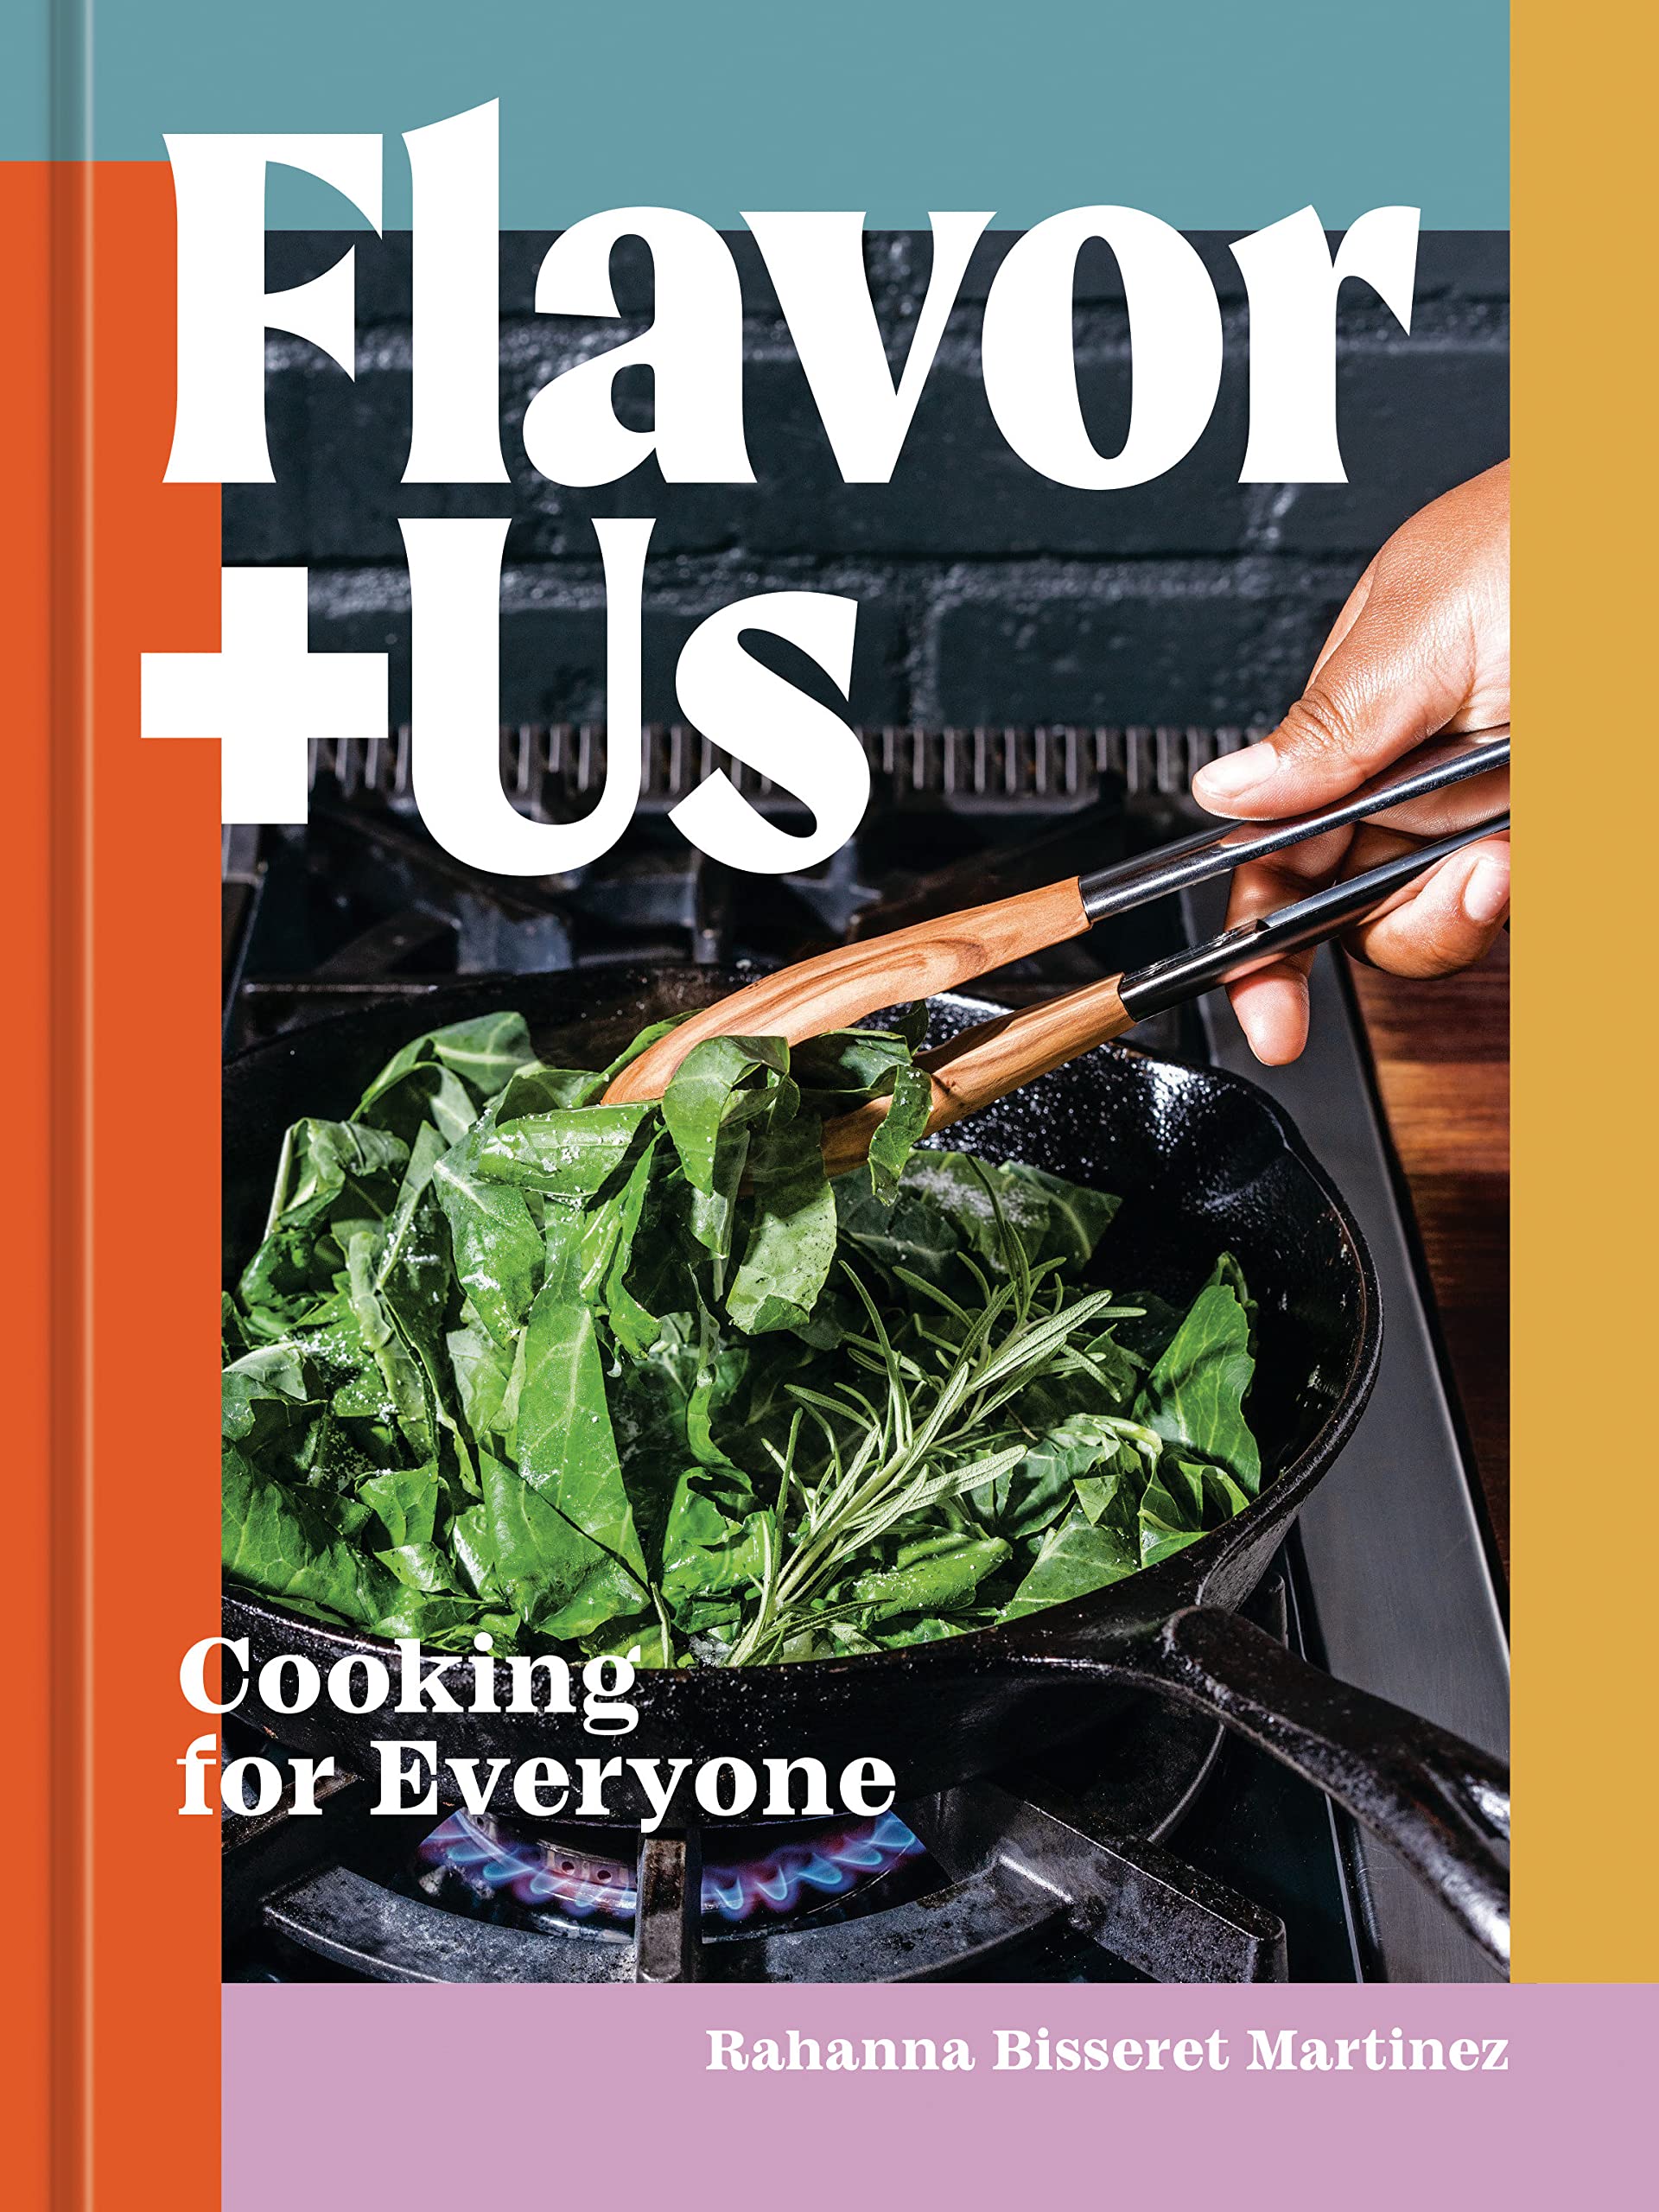 Flavor+Us: Cooking for Everyone (Rahanna Bisseret Martinez) *Signed*